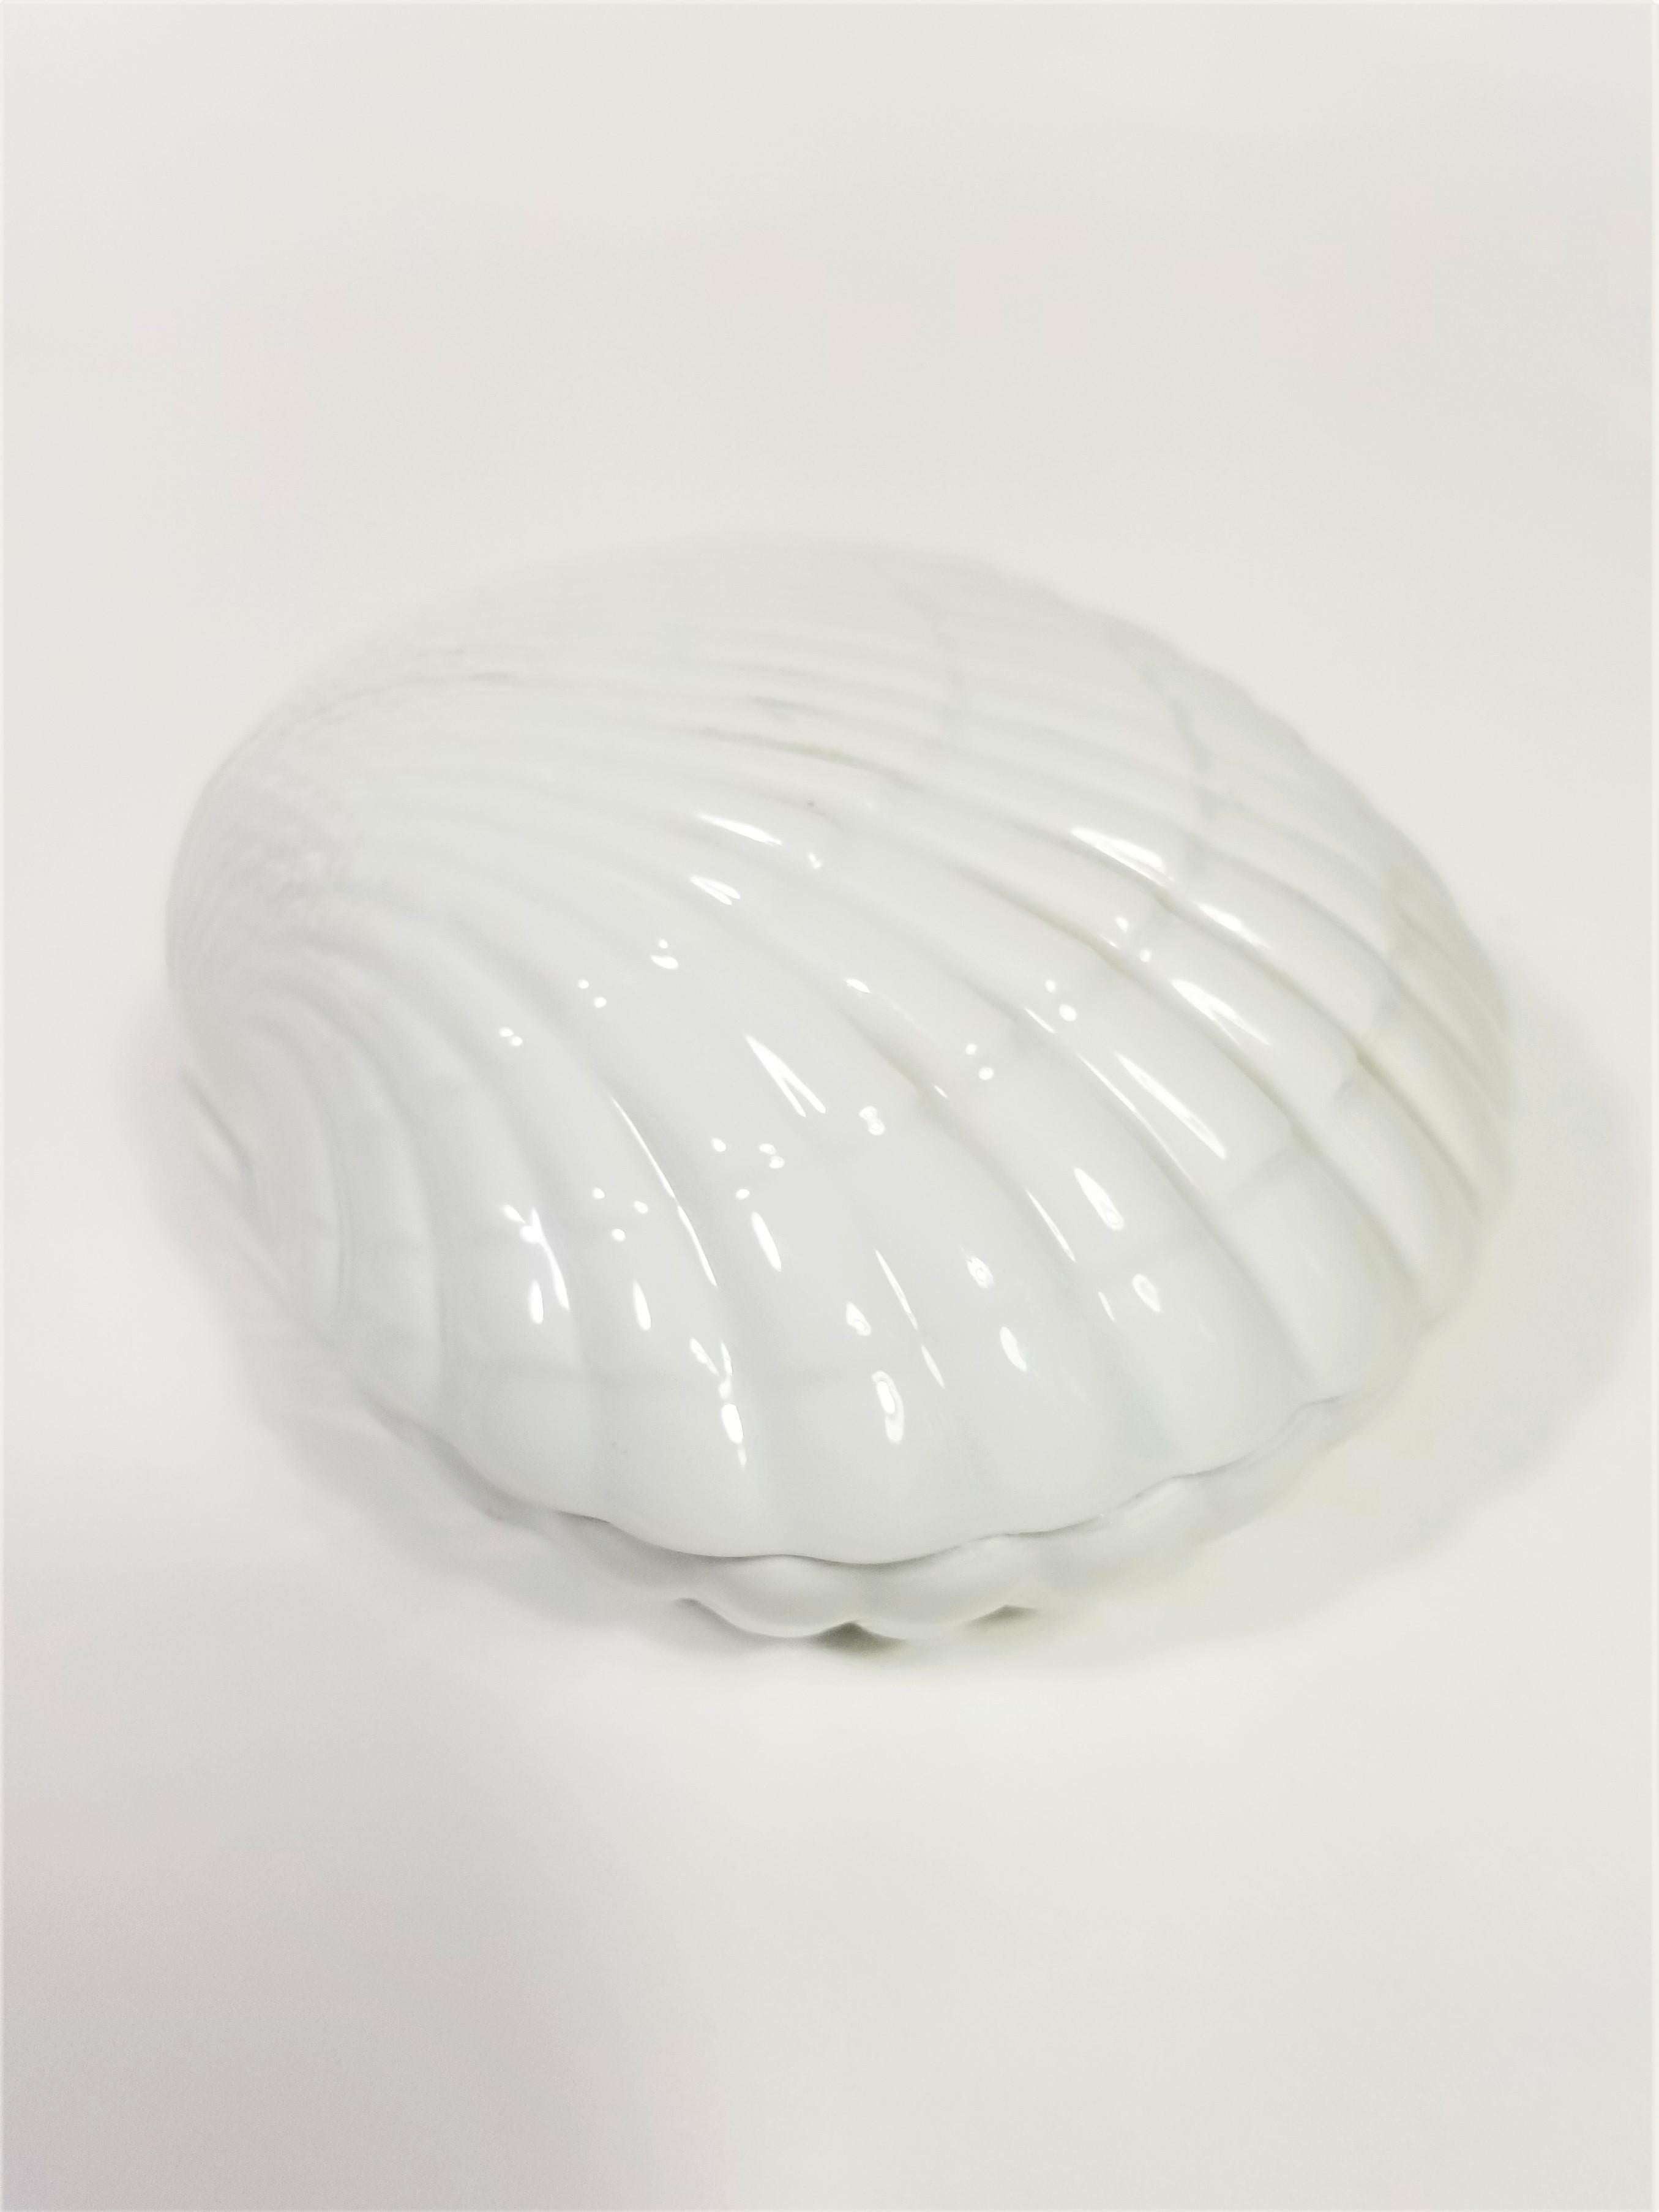 France Porcelain Ceramic Clam Shell Midcentury For Sale 6